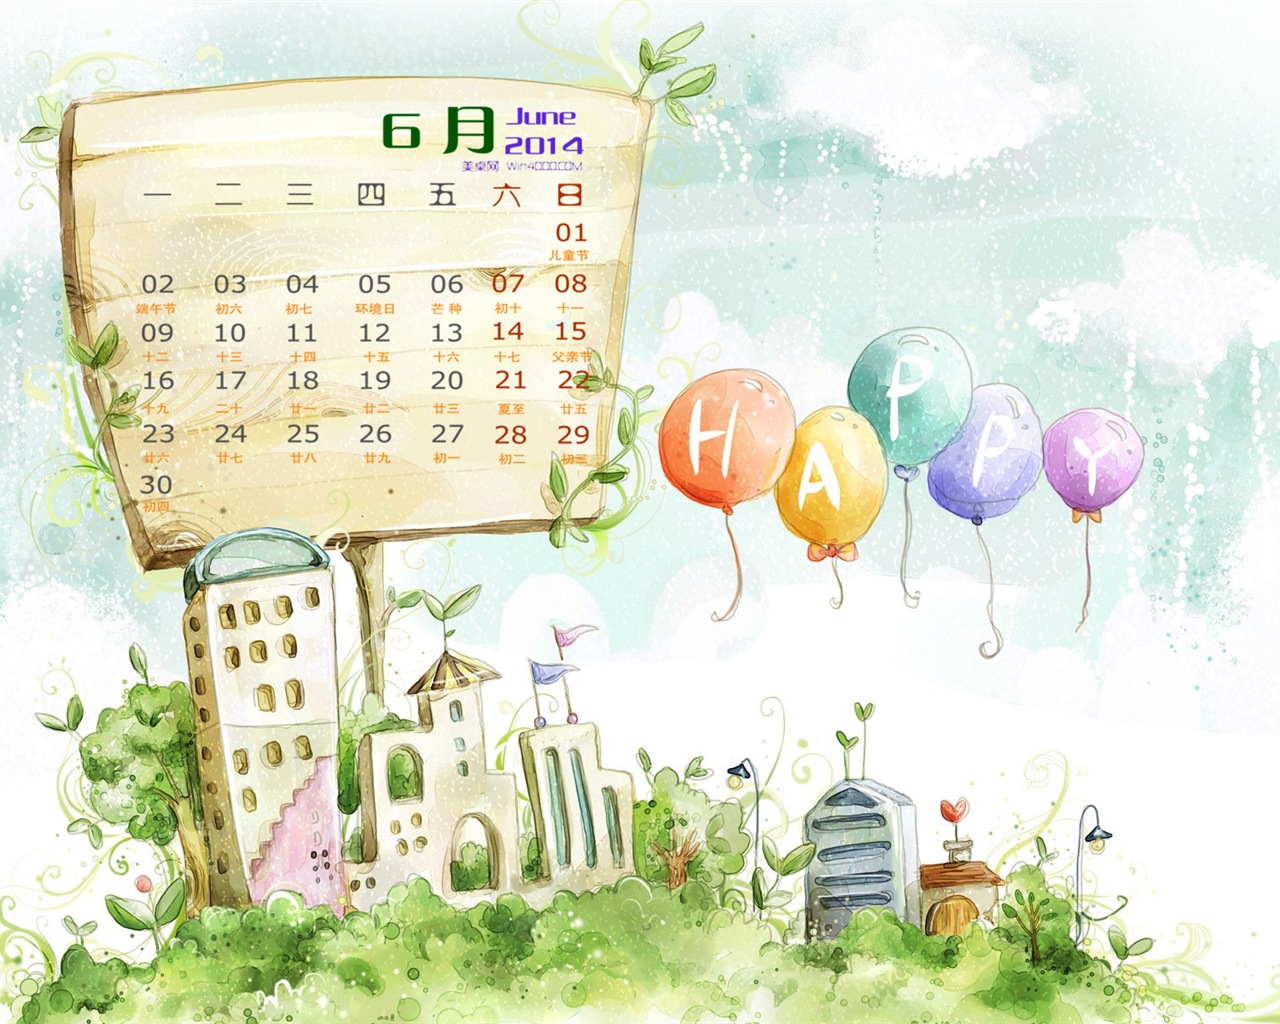 Juni 2014 Kalender Wallpaper (1) #11 - 1280x1024